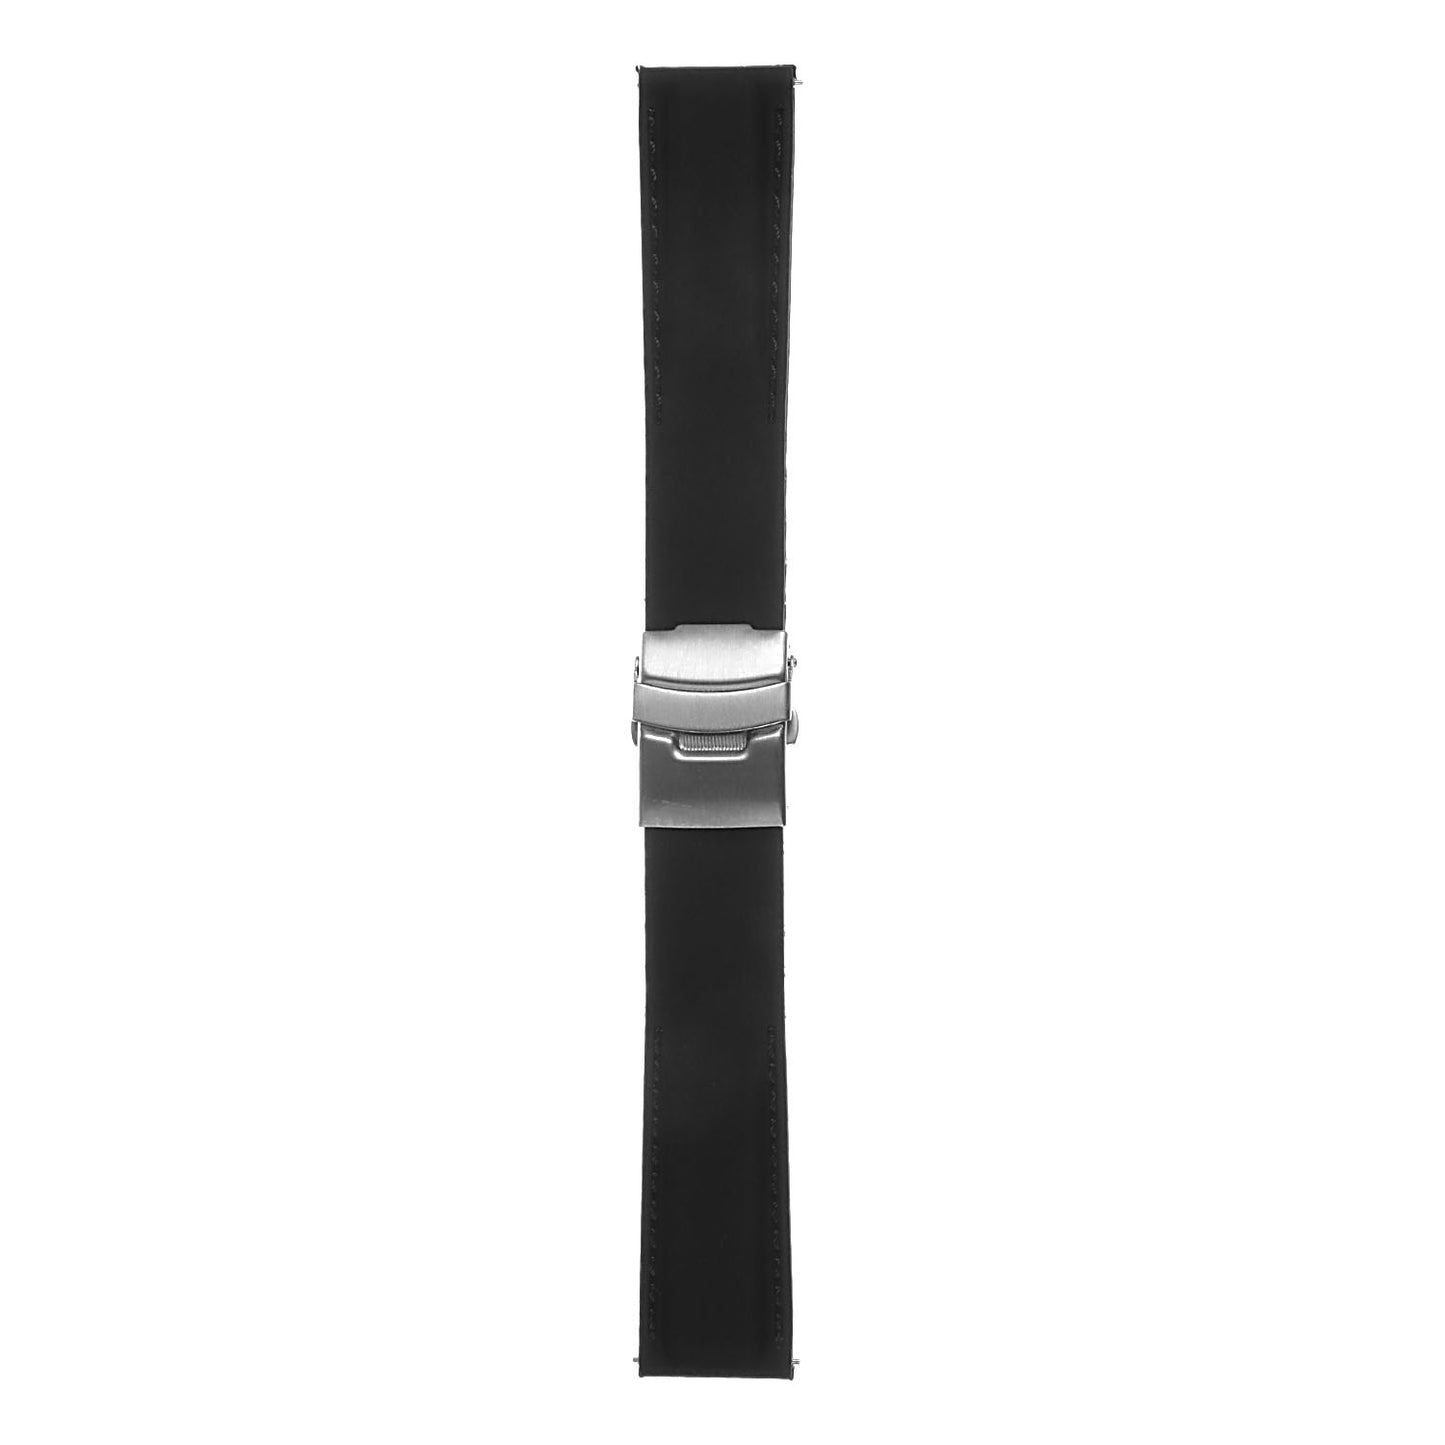 Rubber Strap w/ Stitching & Clasp for Samsung Galaxy Watch 3